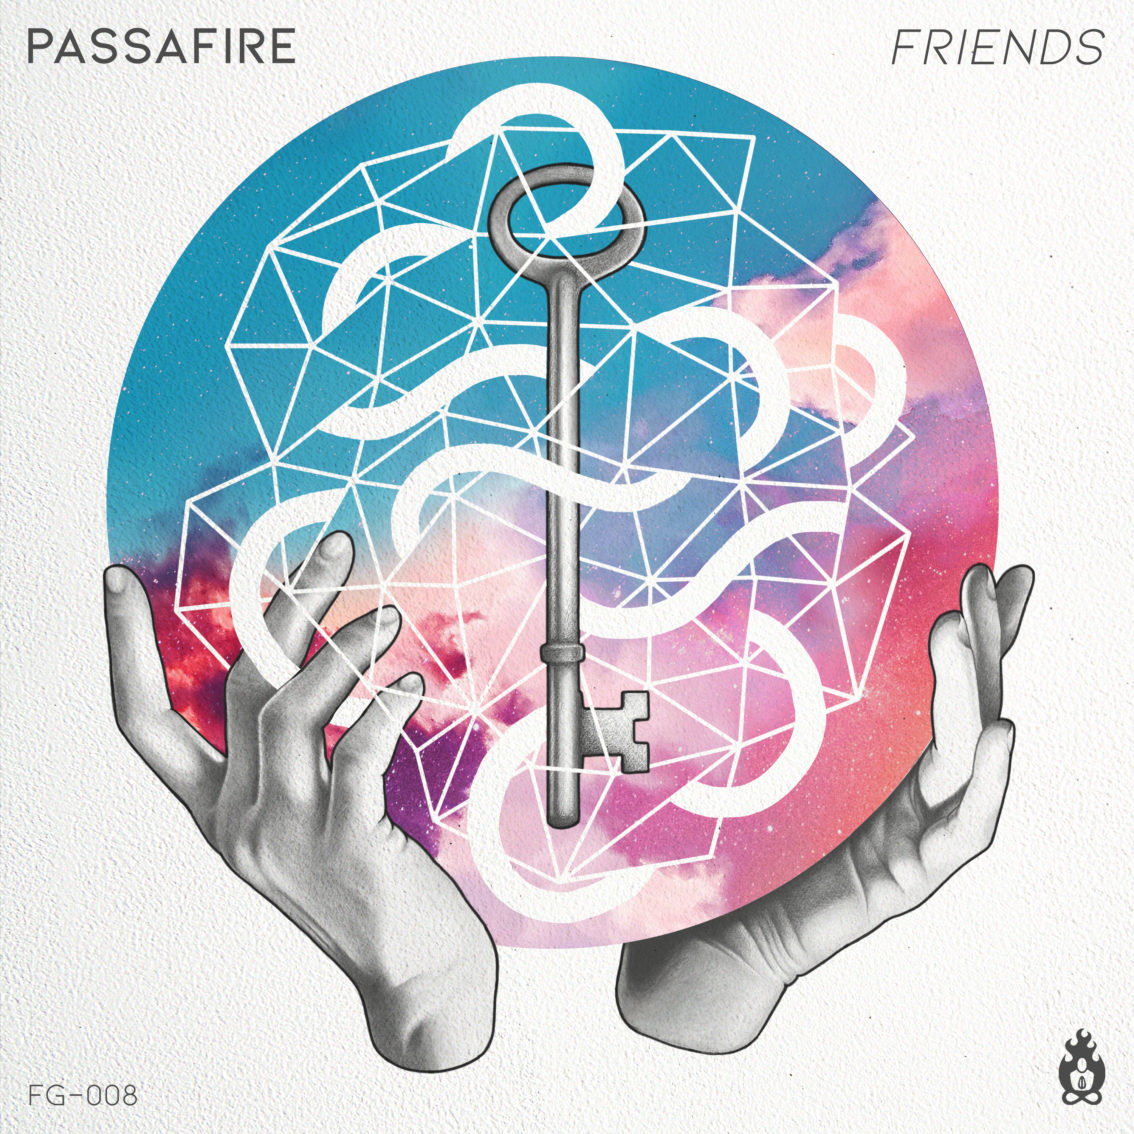 Passafire - Friends